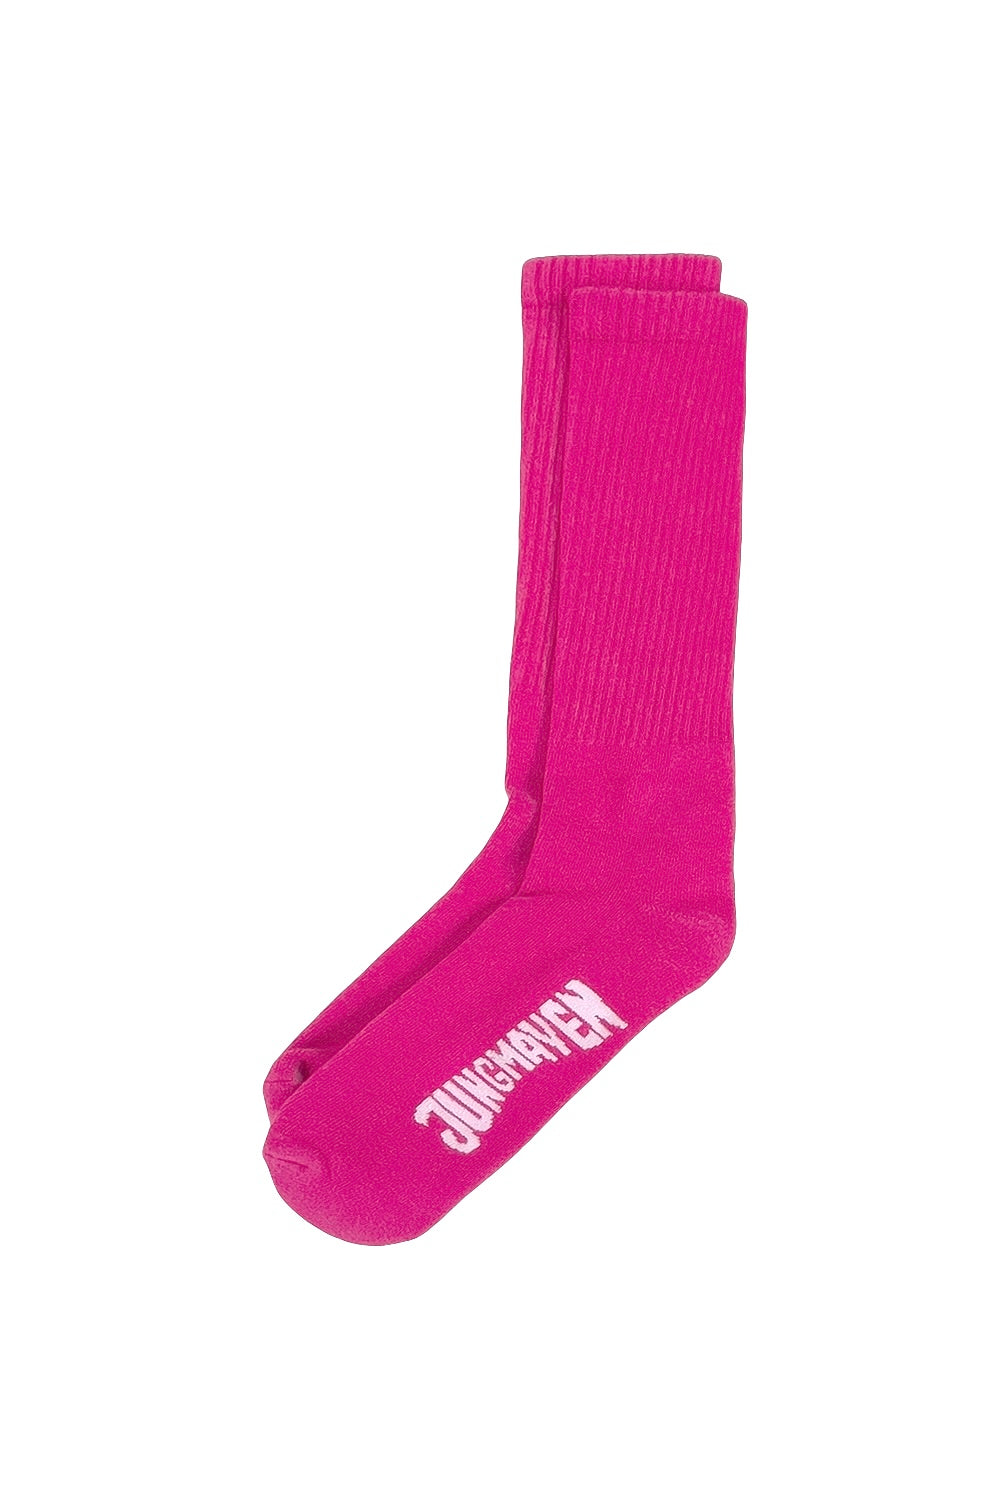 Hemp Crew Socks | Jungmaven Hemp Clothing & Accessories / Color:Pink Grapefruit 